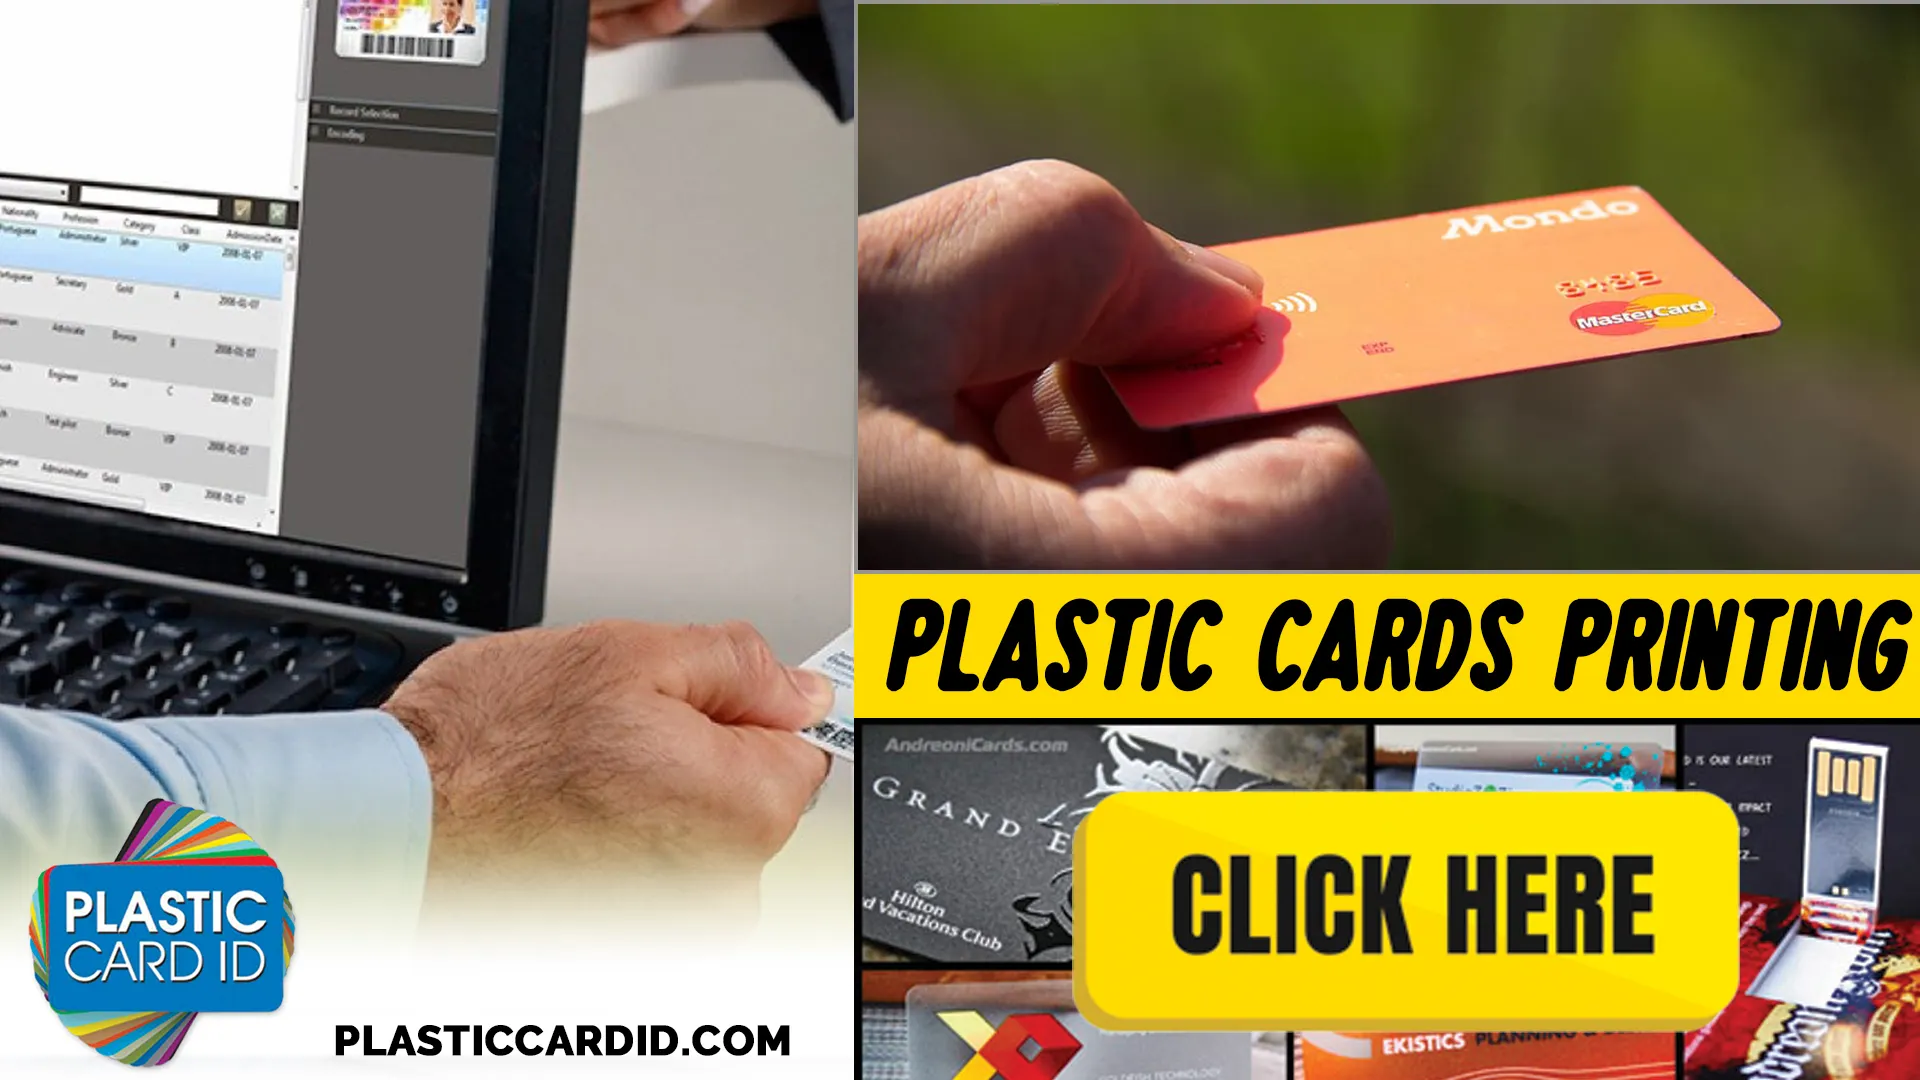 Plastic Card ID
's Nationwide Reach for Printer Enhancement